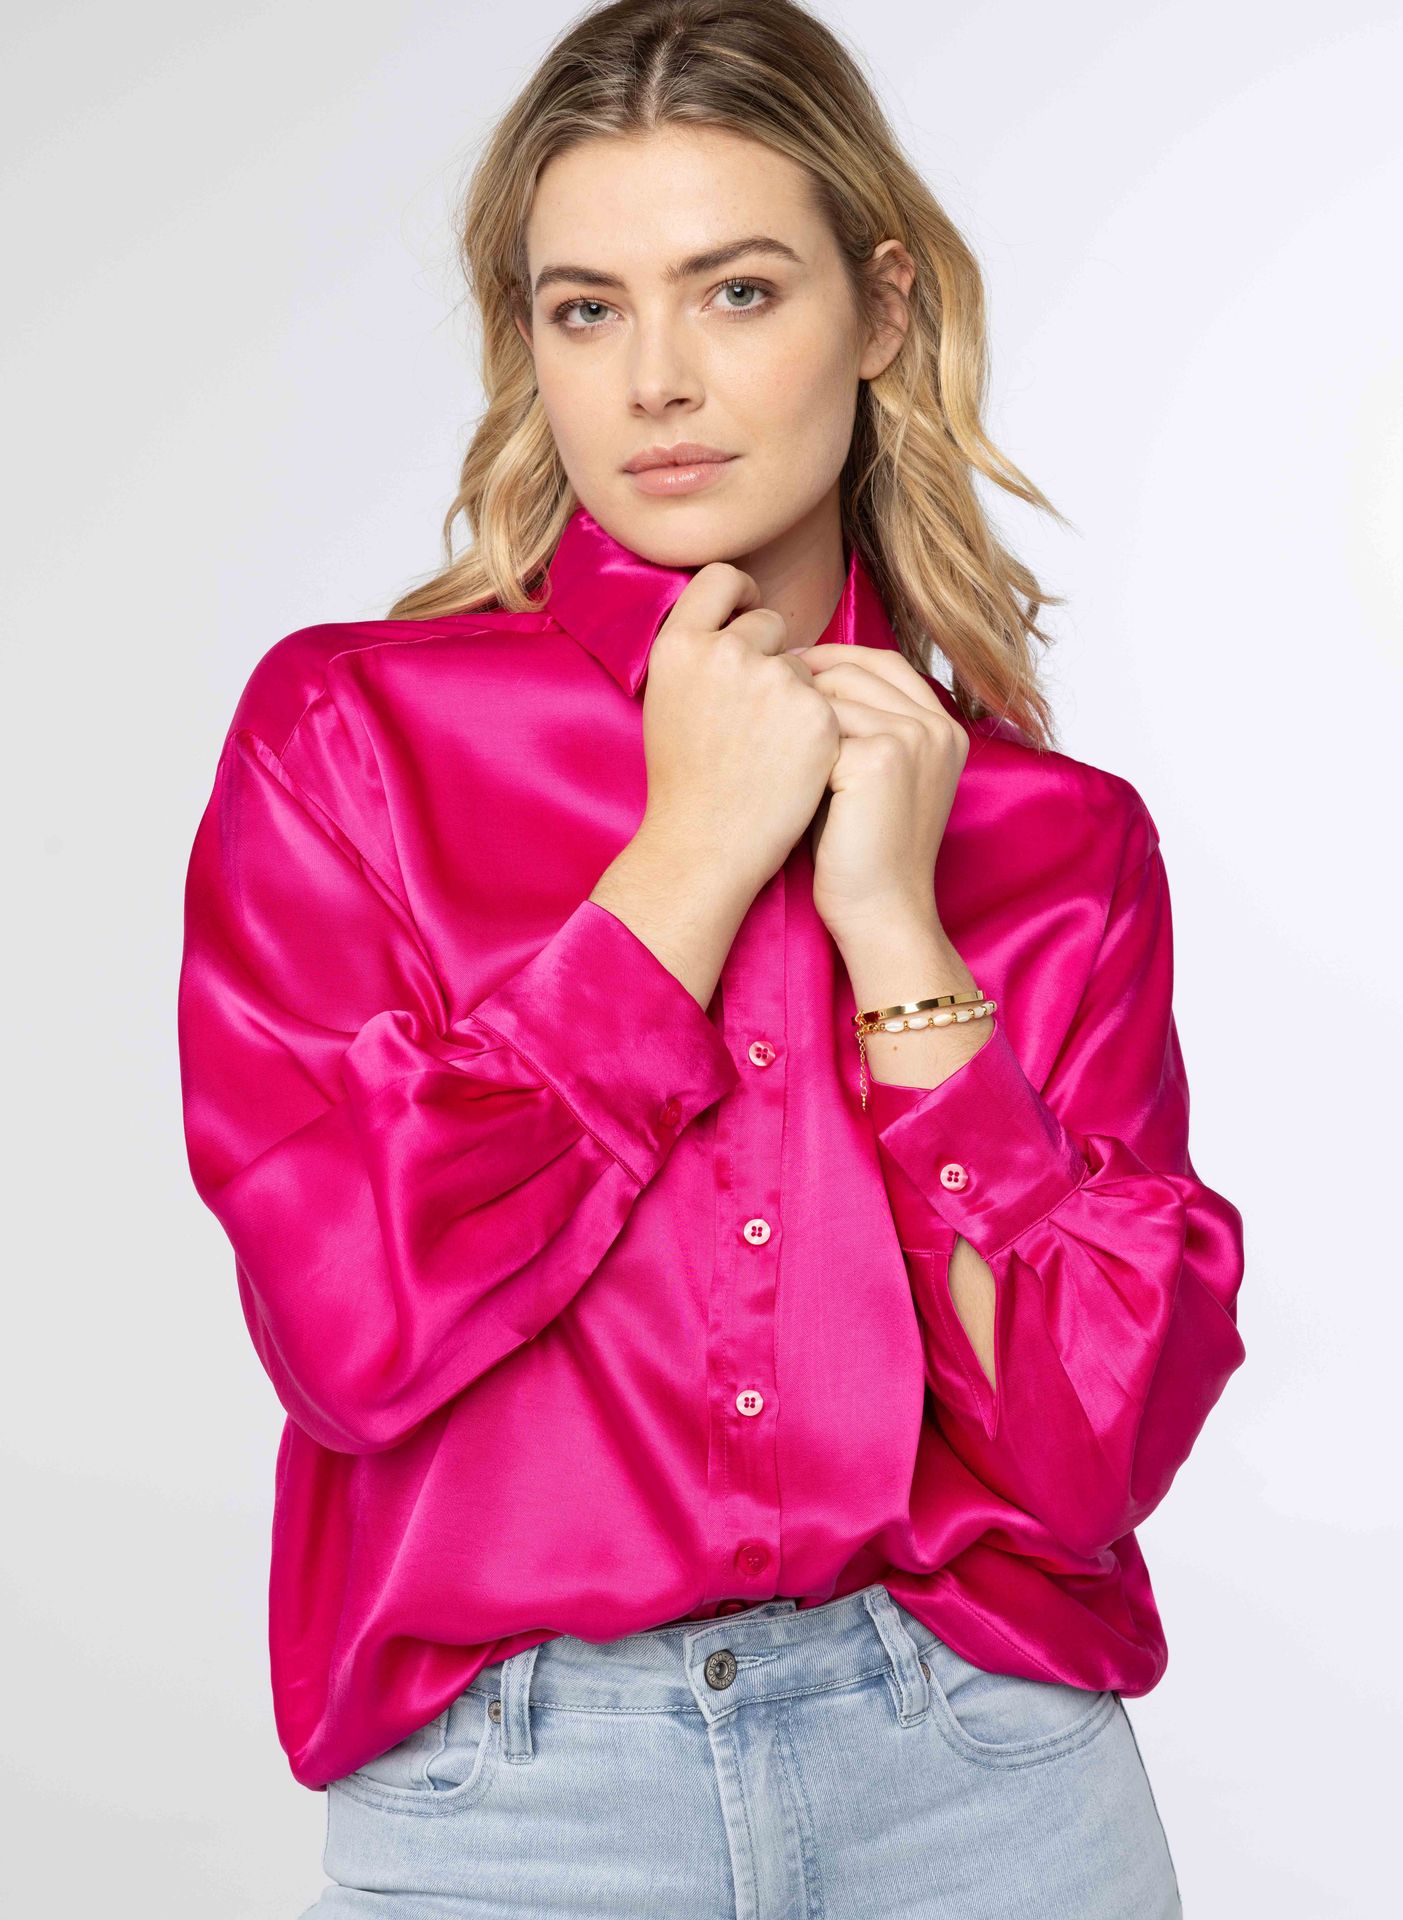 Norah Roze glanzende blouse pink 213940-900